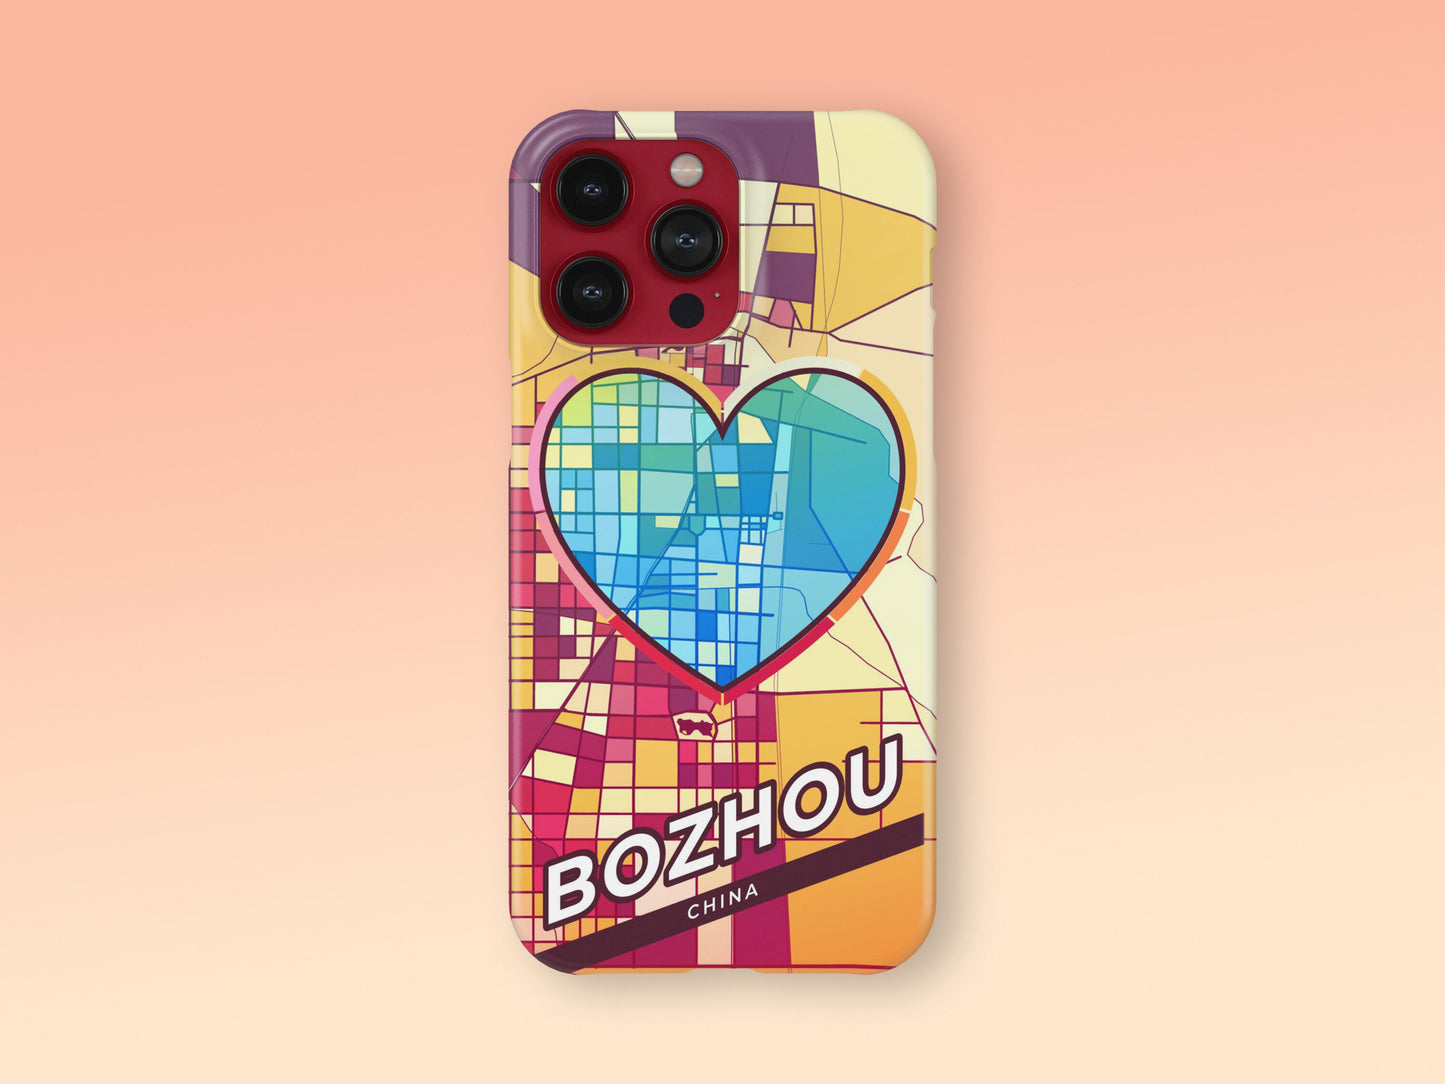 Bozhou China slim phone case with colorful icon. Birthday, wedding or housewarming gift. Couple match cases. 2